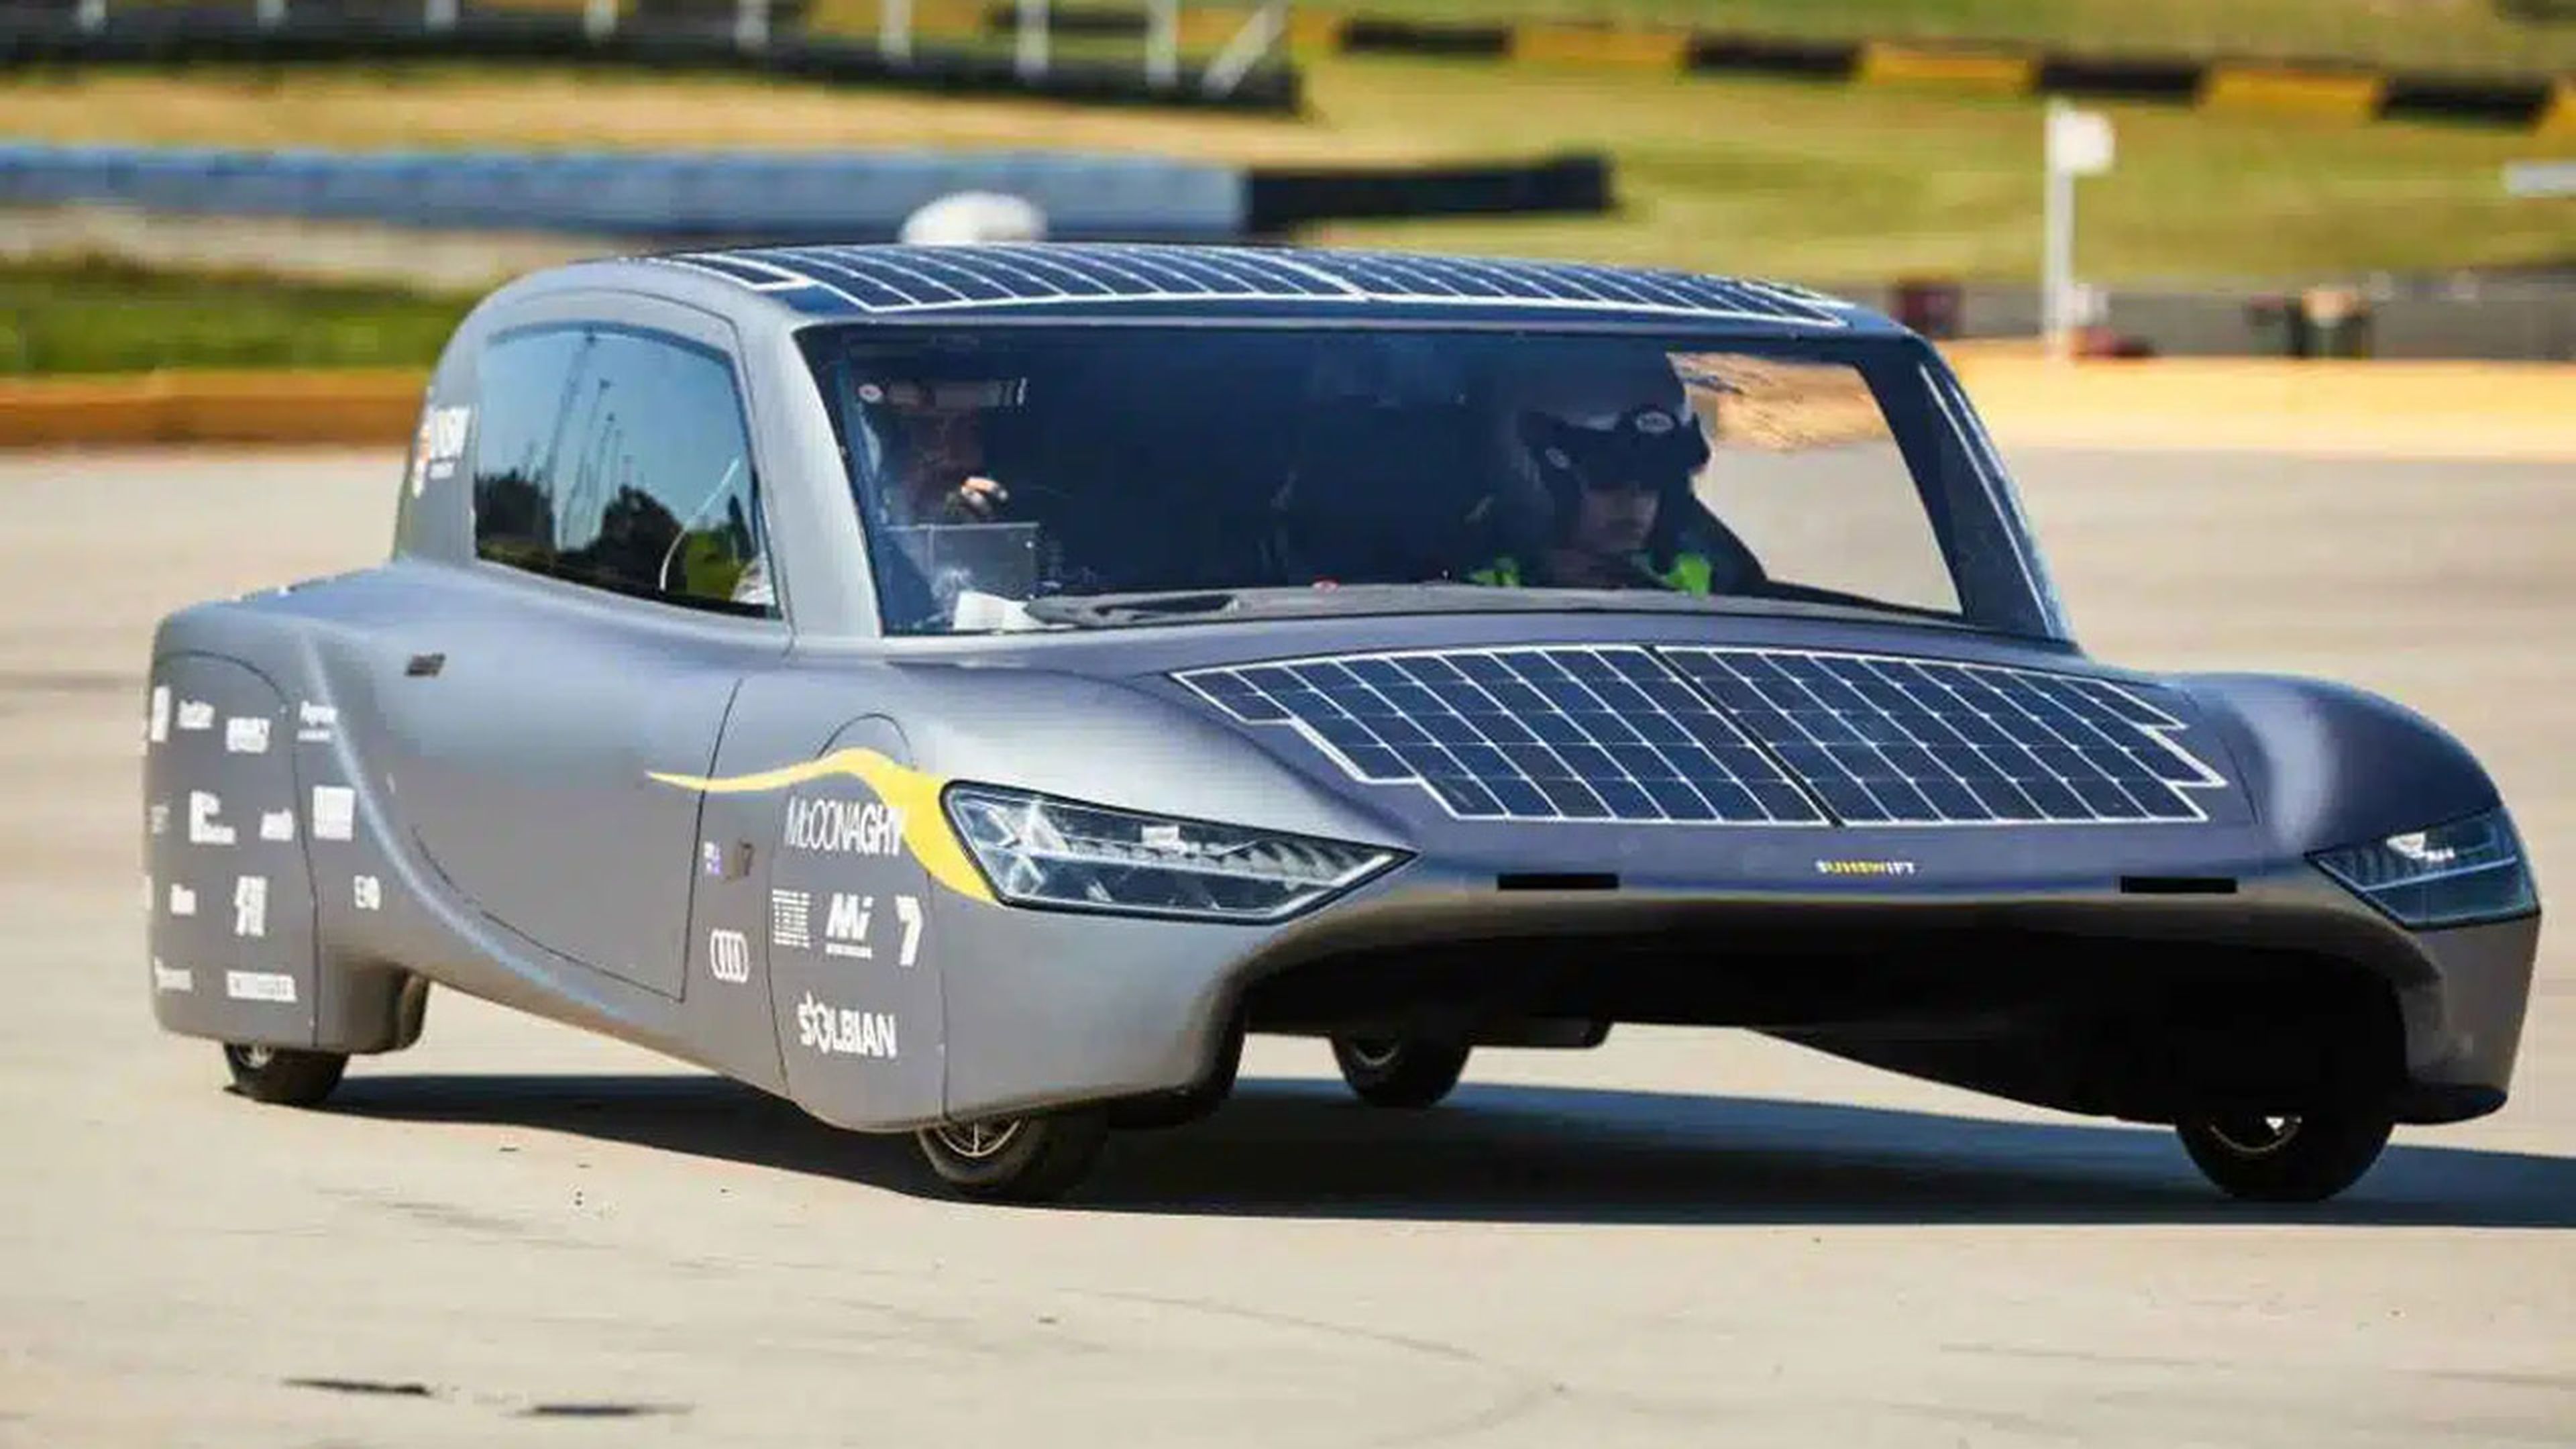 Sunswift 7 coche eléctrico solar